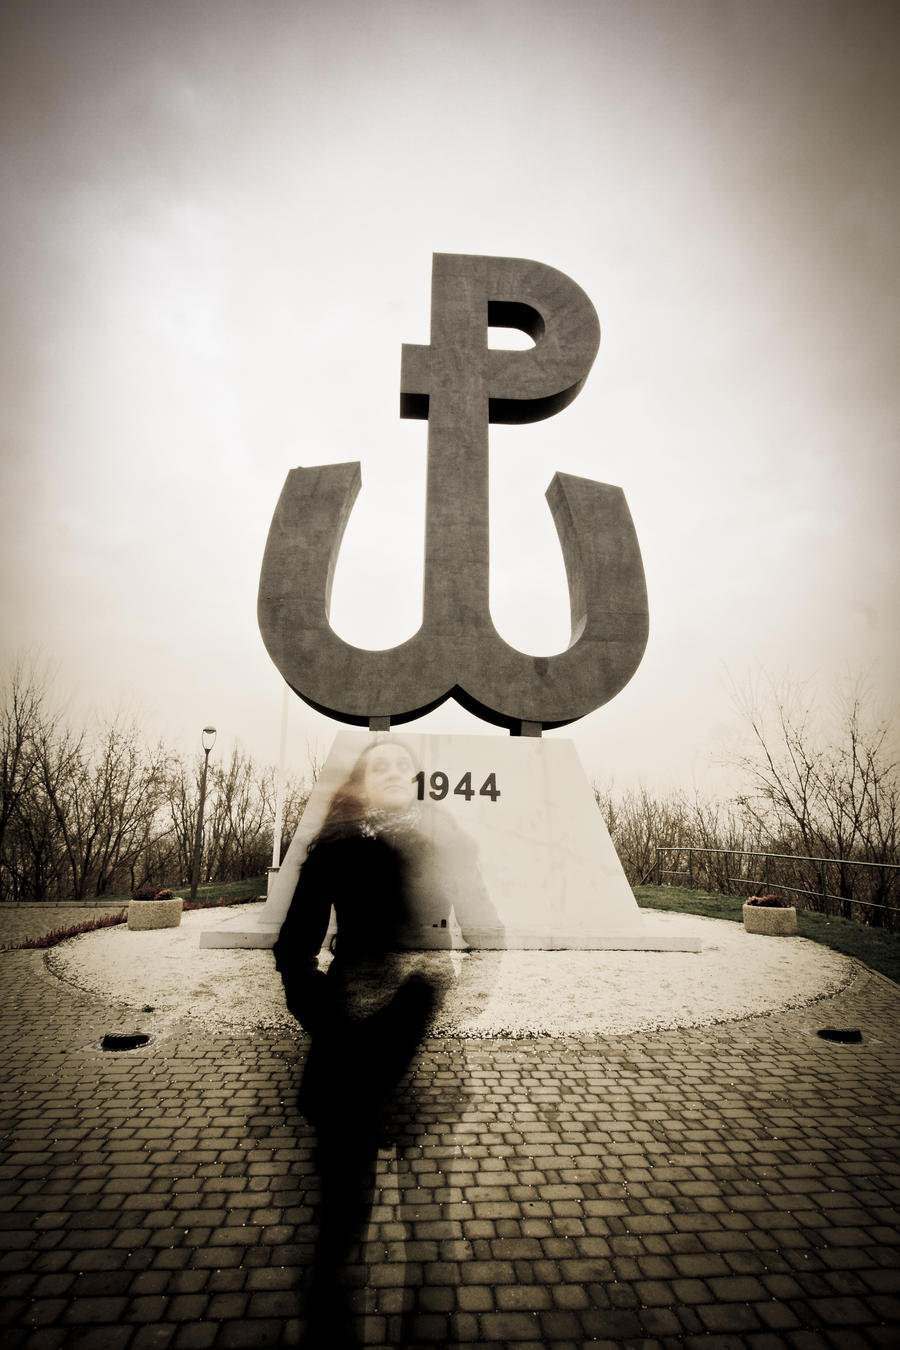 Warsaw Uprising [PL] [movie] [photo] [music]